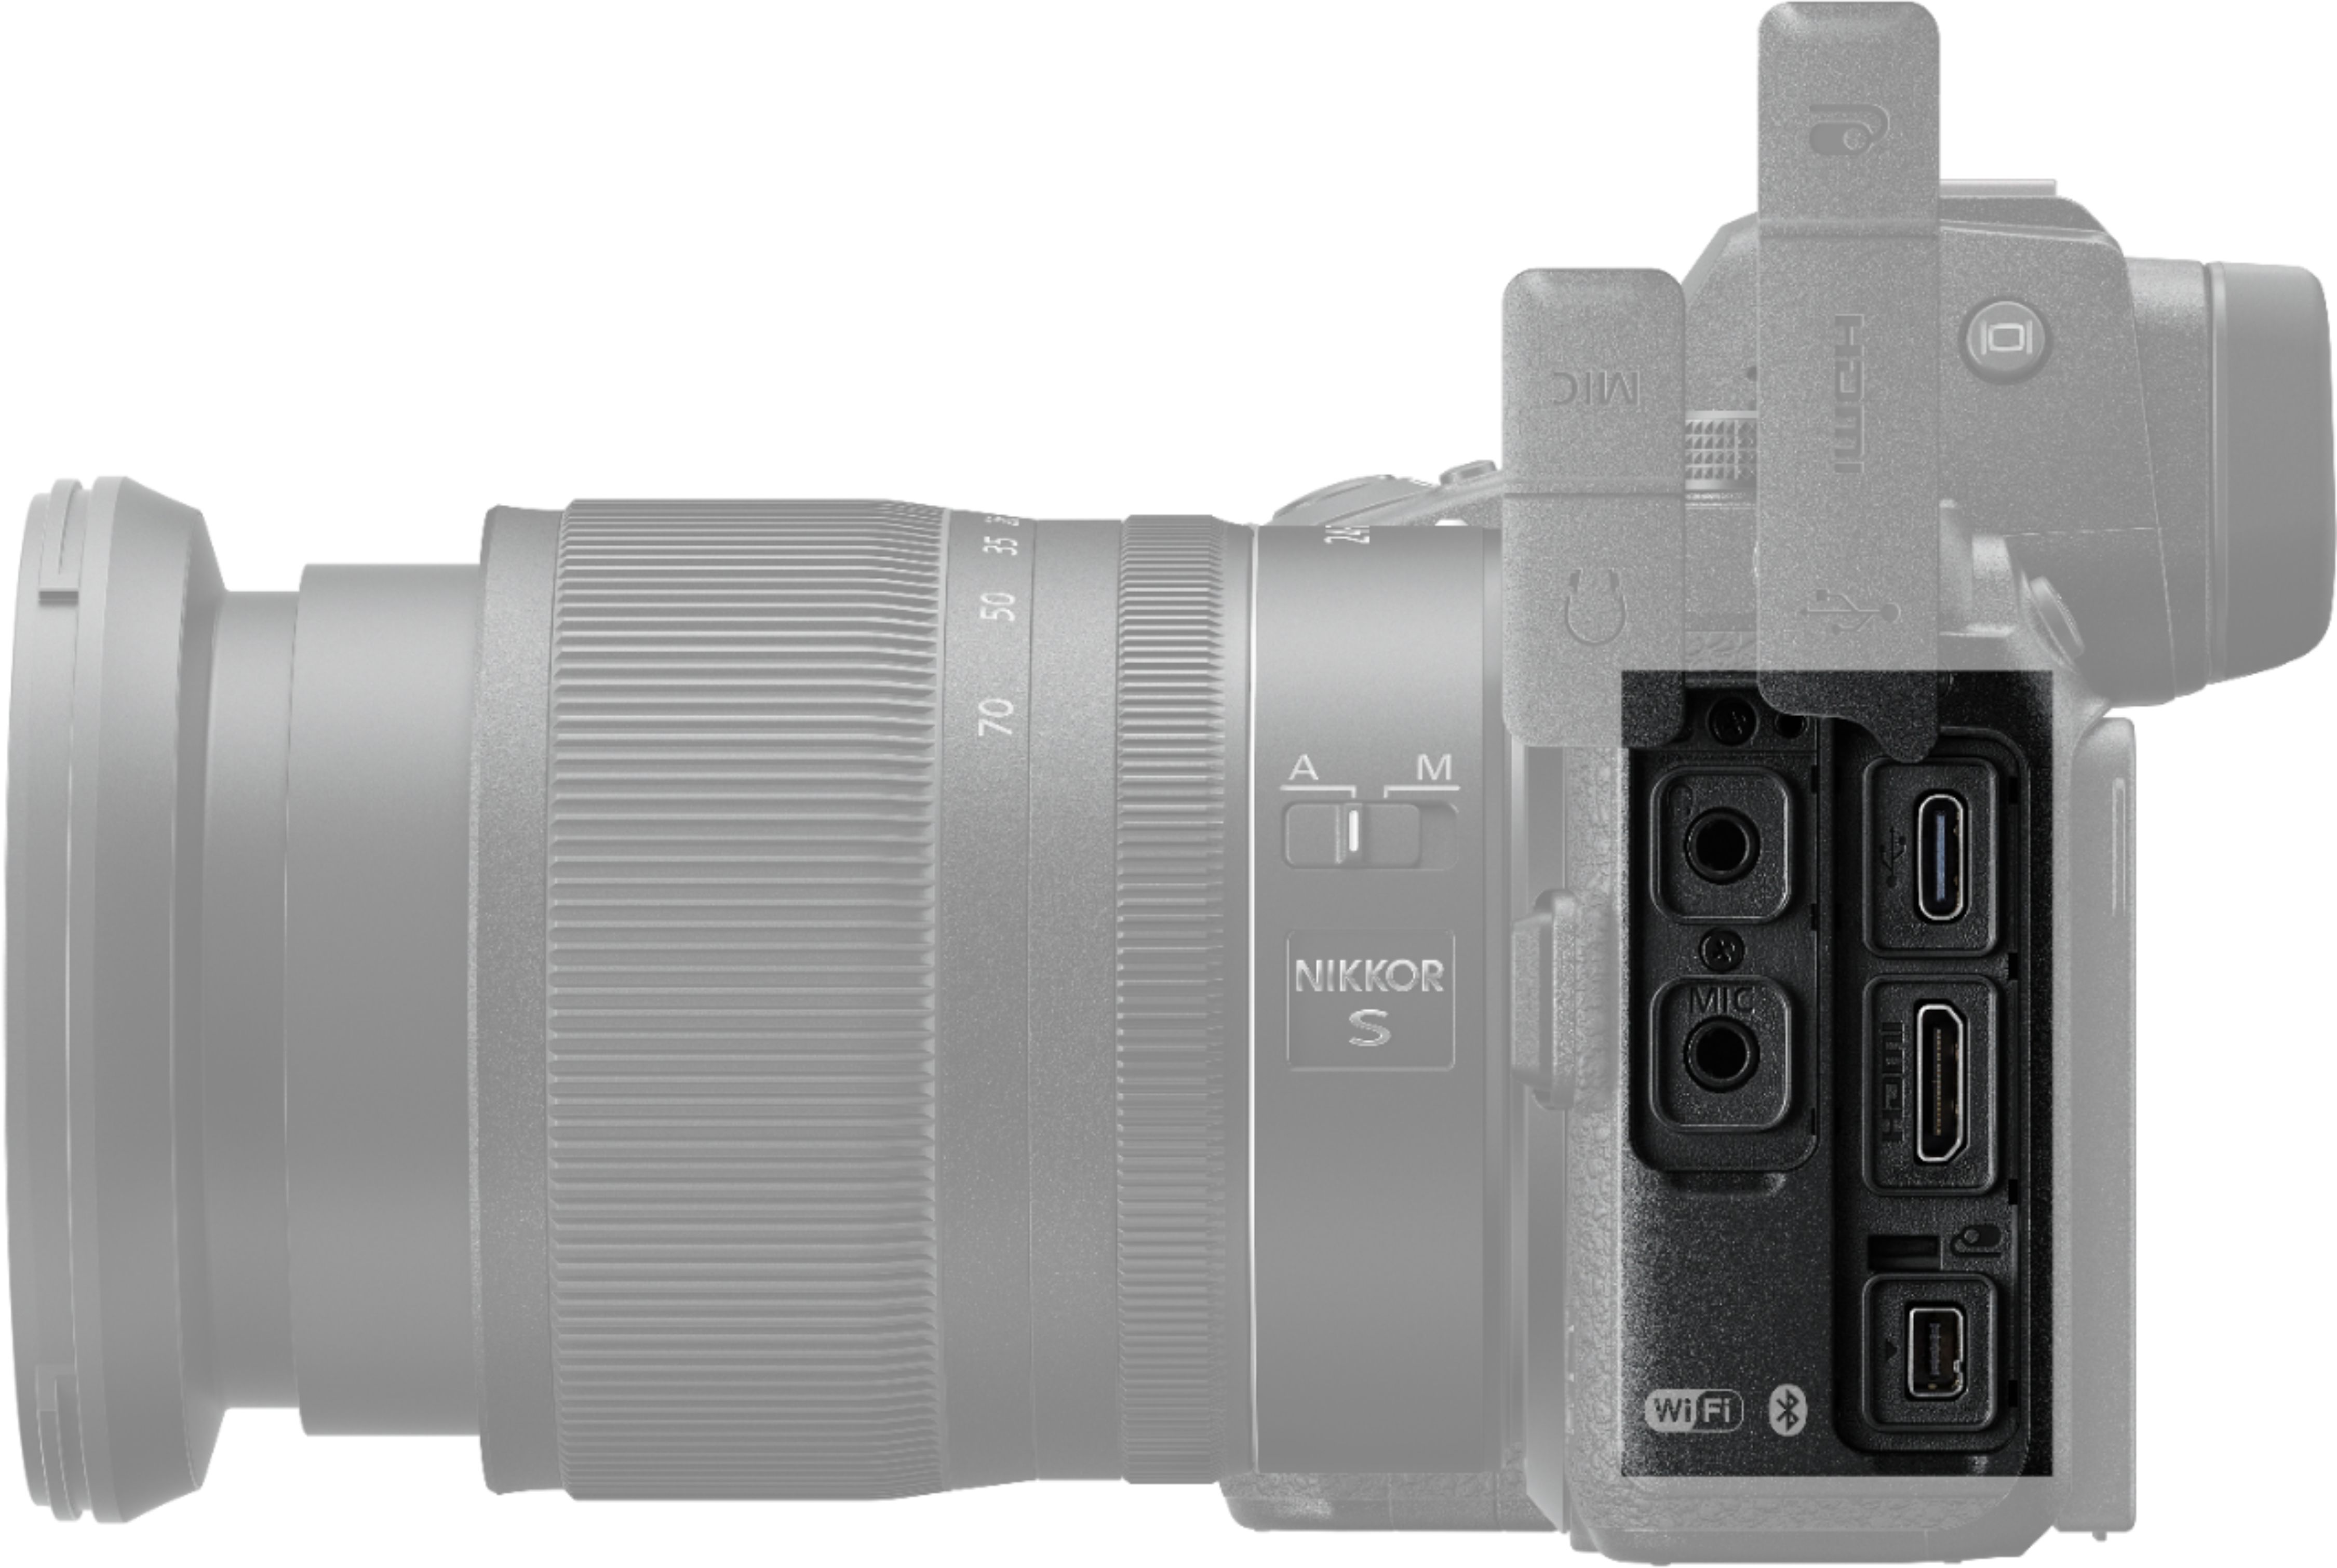 Nikon Z 6 II 4k Video Mirrorless Camera (Body only) Black 1659 